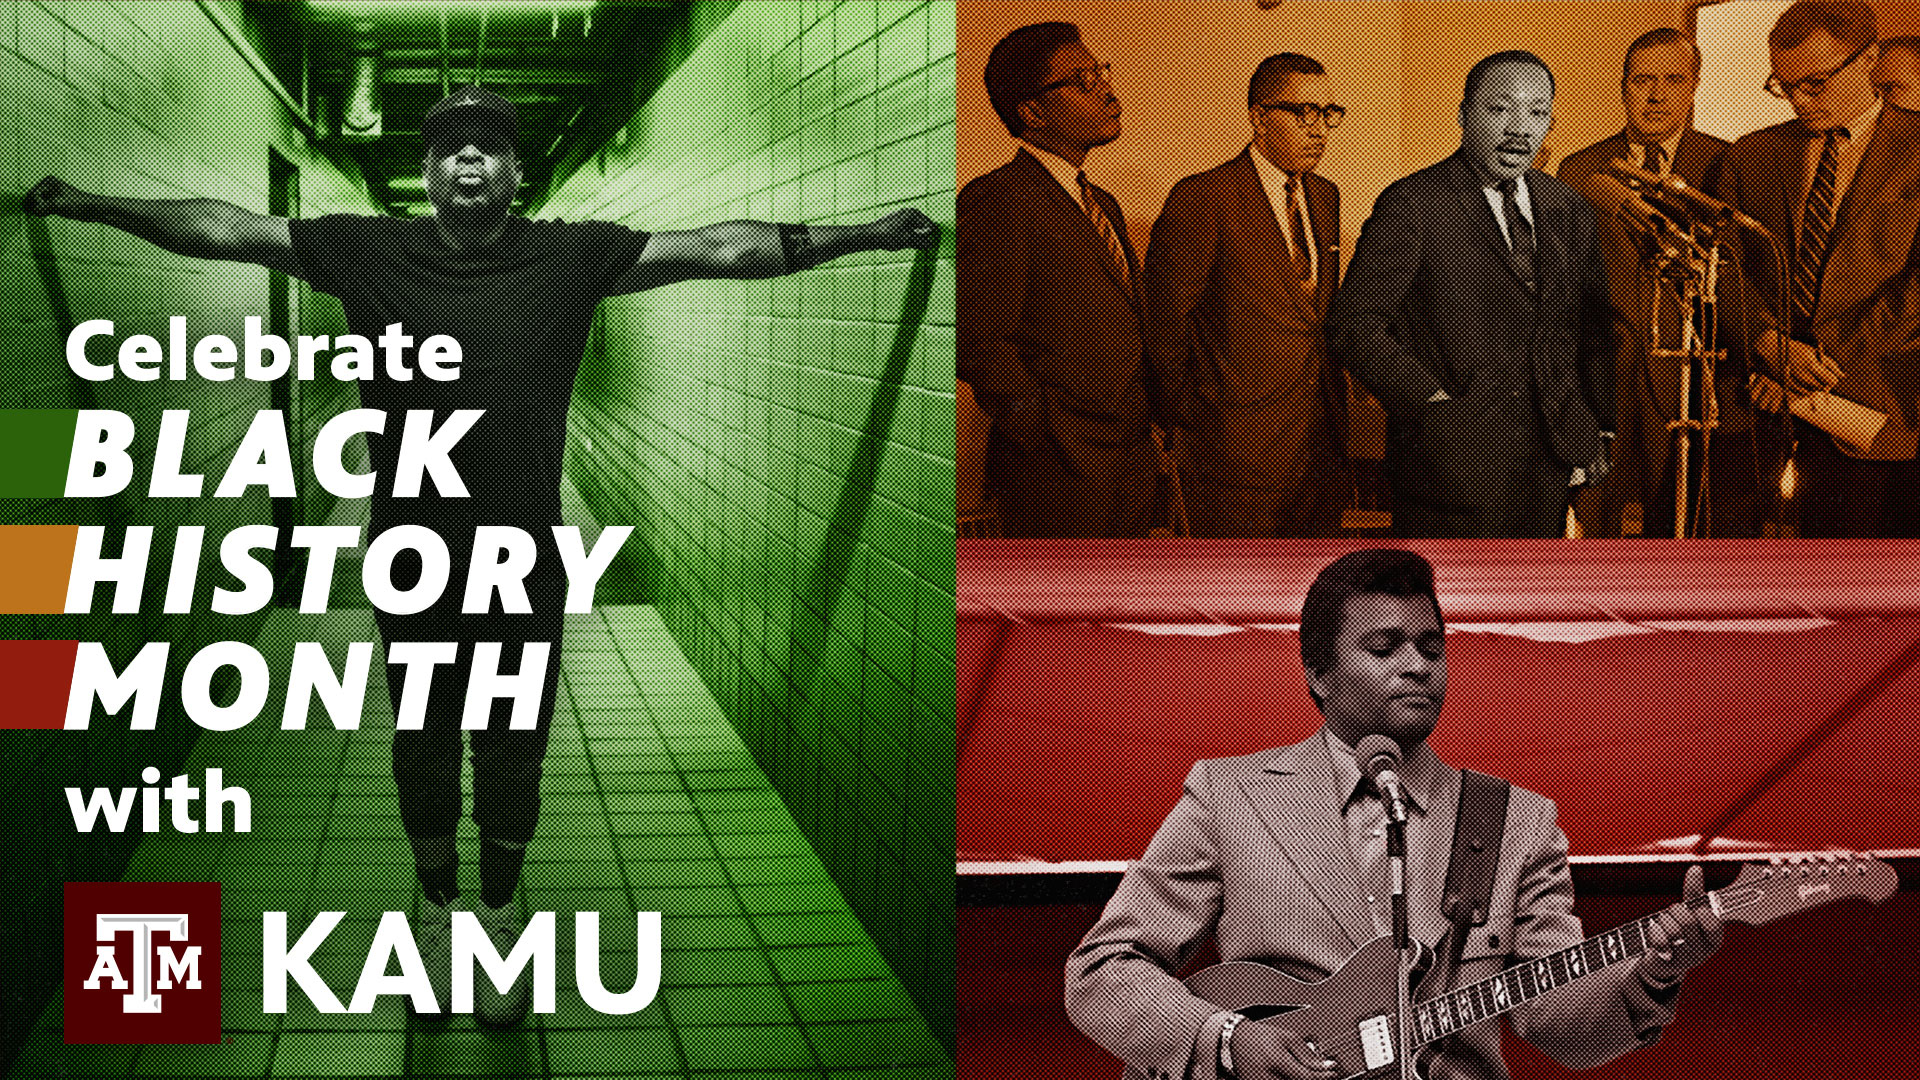 Celebrate Black History Month with KAMU